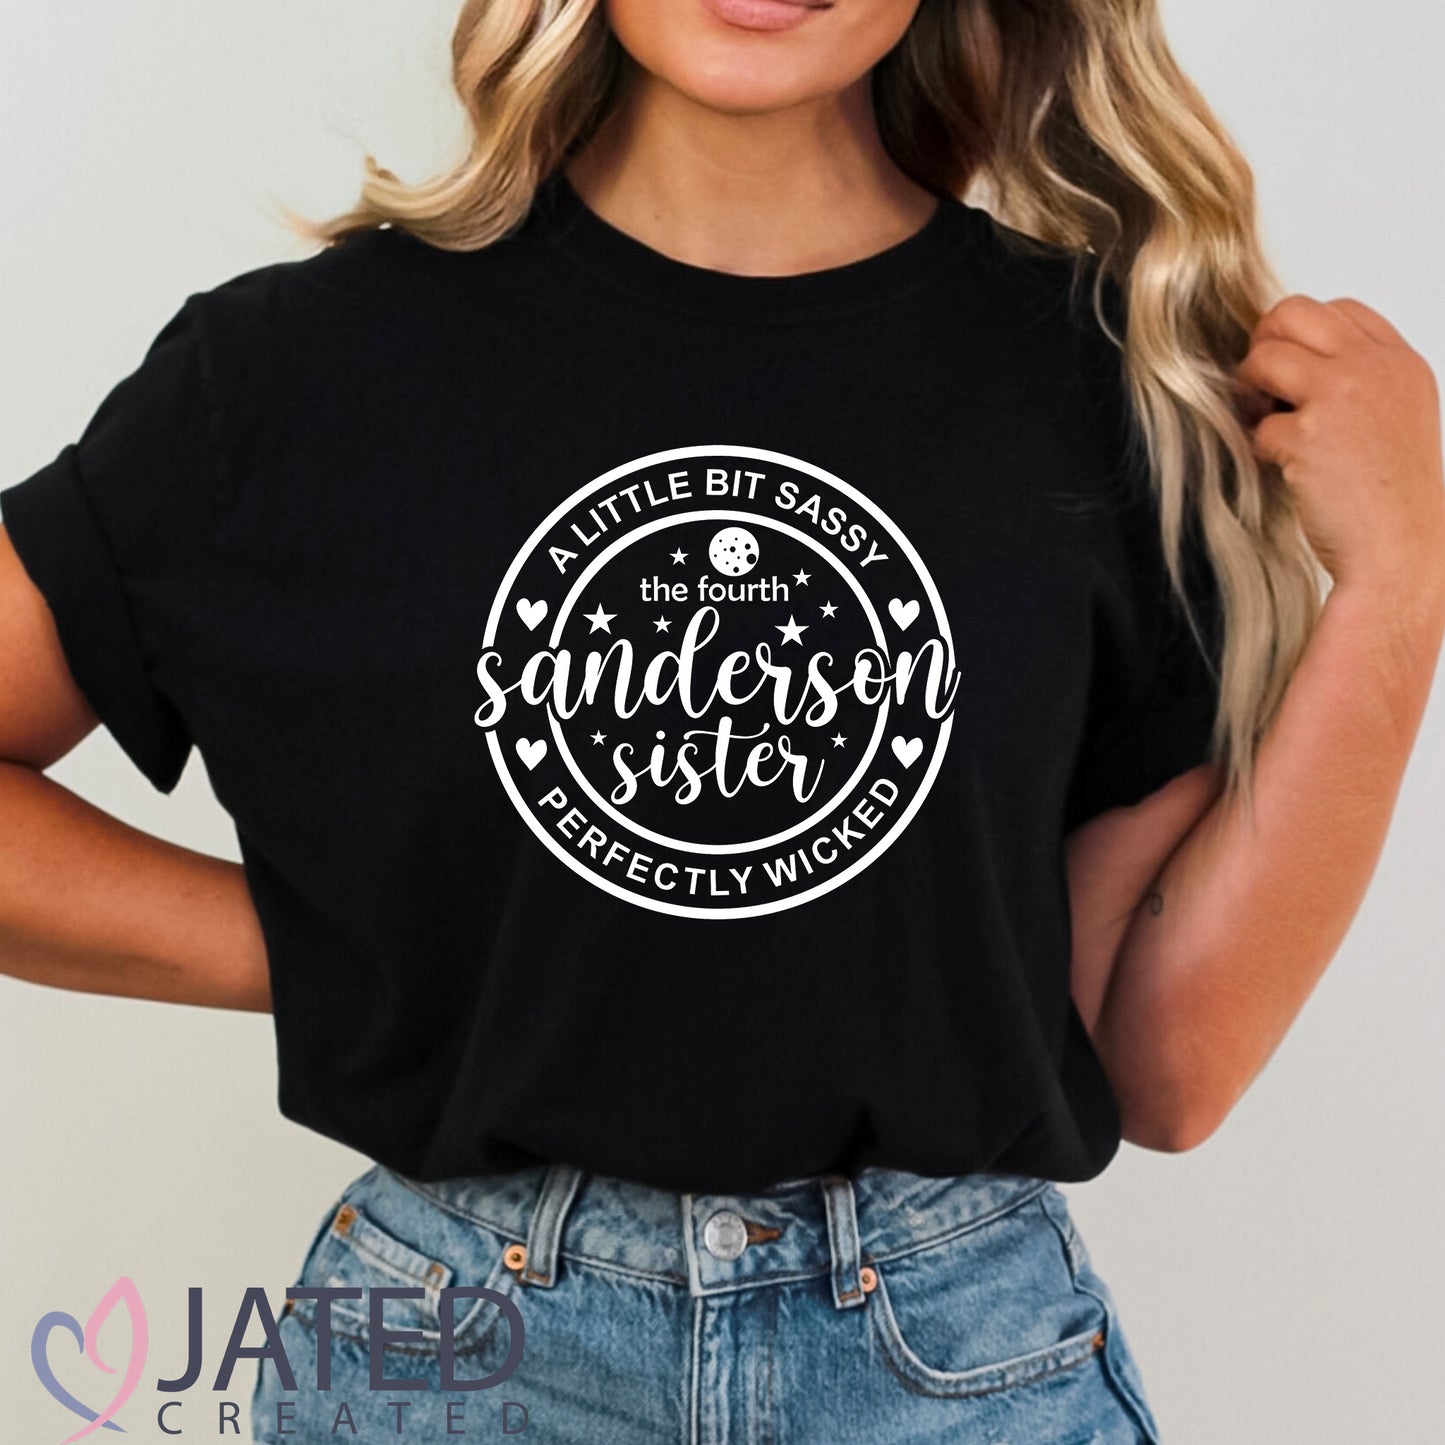 Sanderson Sisters 10 | Halloween T-Shirt